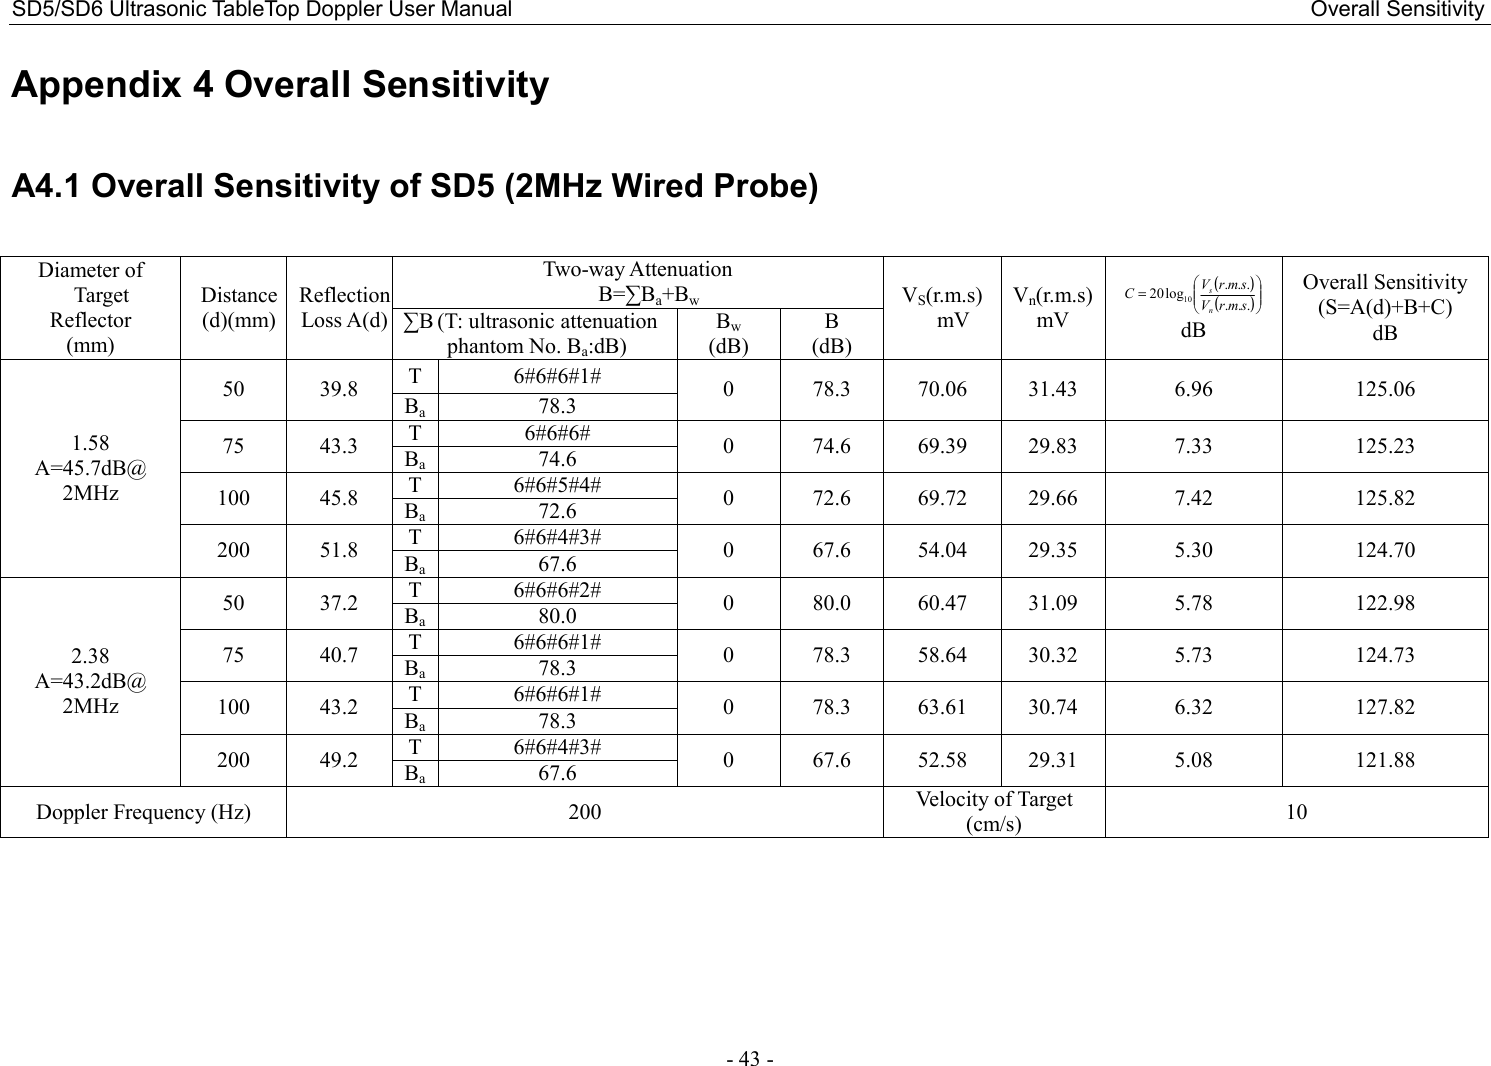 SD5/SD6 Ultrasonic TableTop Doppler User Manual                                                                                                                                                  Overall Sensitivity - 43 - Appendix 4 Overall Sensitivity  A4.1 Overall Sensitivity of SD5 (2MHz Wired Probe)  Diameter of Target Reflector (mm) Distance (d)(mm) Reflection Loss A(d) Two-way Attenuation B=∑Ba+Bw VS(r.m.s) mV Vn(r.m.s) mV ()( )=......log2010smrVsmrVCns dB Overall Sensitivity (S=A(d)+B+C) dB ∑B (T: ultrasonic attenuation   phantom No. Ba:dB) Bw (dB) B (dB) 1.58 A=45.7dB@ 2MHz 50  39.8  T 6#6#6#1#  0  78.3  70.06  31.43  6.96  125.06 Ba 78.3 75  43.3  T 6#6#6#  0  74.6  69.39  29.83  7.33  125.23 Ba 74.6 100  45.8  T 6#6#5#4#  0  72.6  69.72  29.66  7.42  125.82 Ba 72.6 200  51.8  T 6#6#4#3#  0  67.6  54.04  29.35  5.30  124.70 Ba 67.6 2.38 A=43.2dB@ 2MHz 50  37.2  T 6#6#6#2#  0  80.0  60.47  31.09  5.78  122.98 Ba 80.0 75  40.7  T 6#6#6#1#  0  78.3  58.64  30.32  5.73  124.73 Ba 78.3 100  43.2  T 6#6#6#1#  0  78.3  63.61  30.74  6.32  127.82 Ba 78.3 200  49.2  T 6#6#4#3#  0  67.6  52.58  29.31  5.08  121.88 Ba 67.6 Doppler Frequency (Hz)  200  Velocity of Target (cm/s)  10  